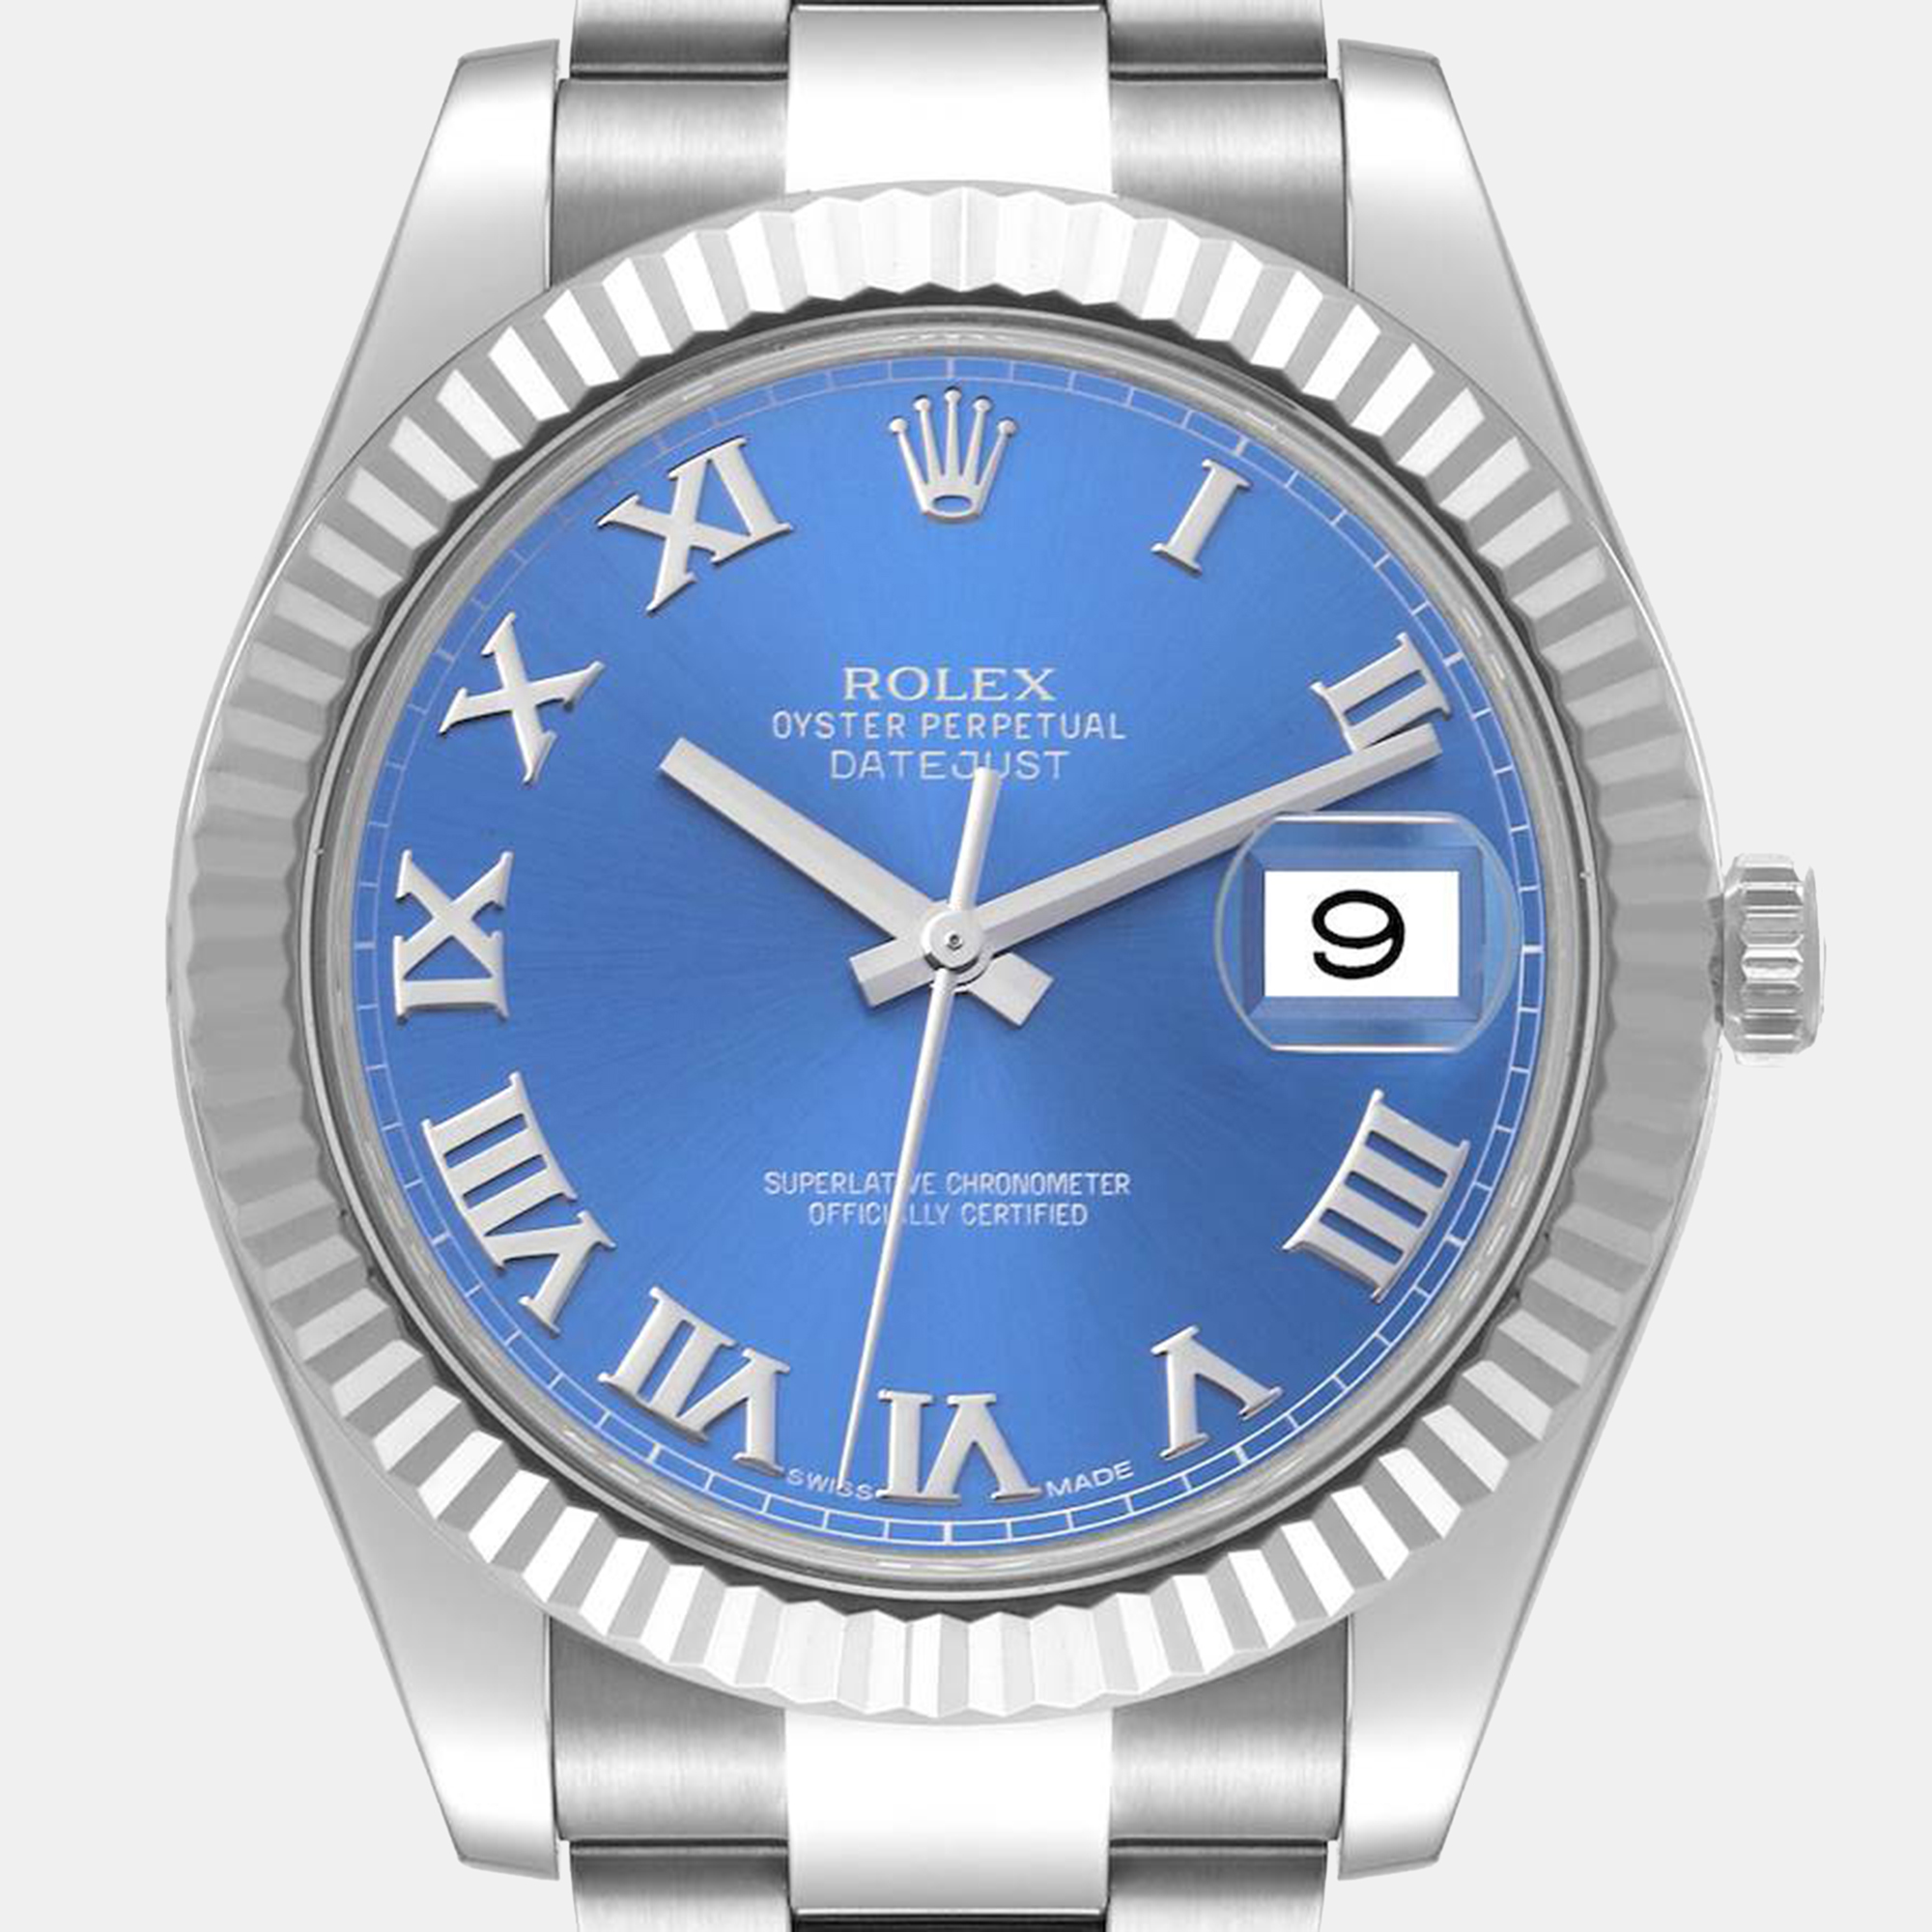 Rolex Datejust II Steel White Gold Blue Roman Dial Men's Watch 116334 41 Mm